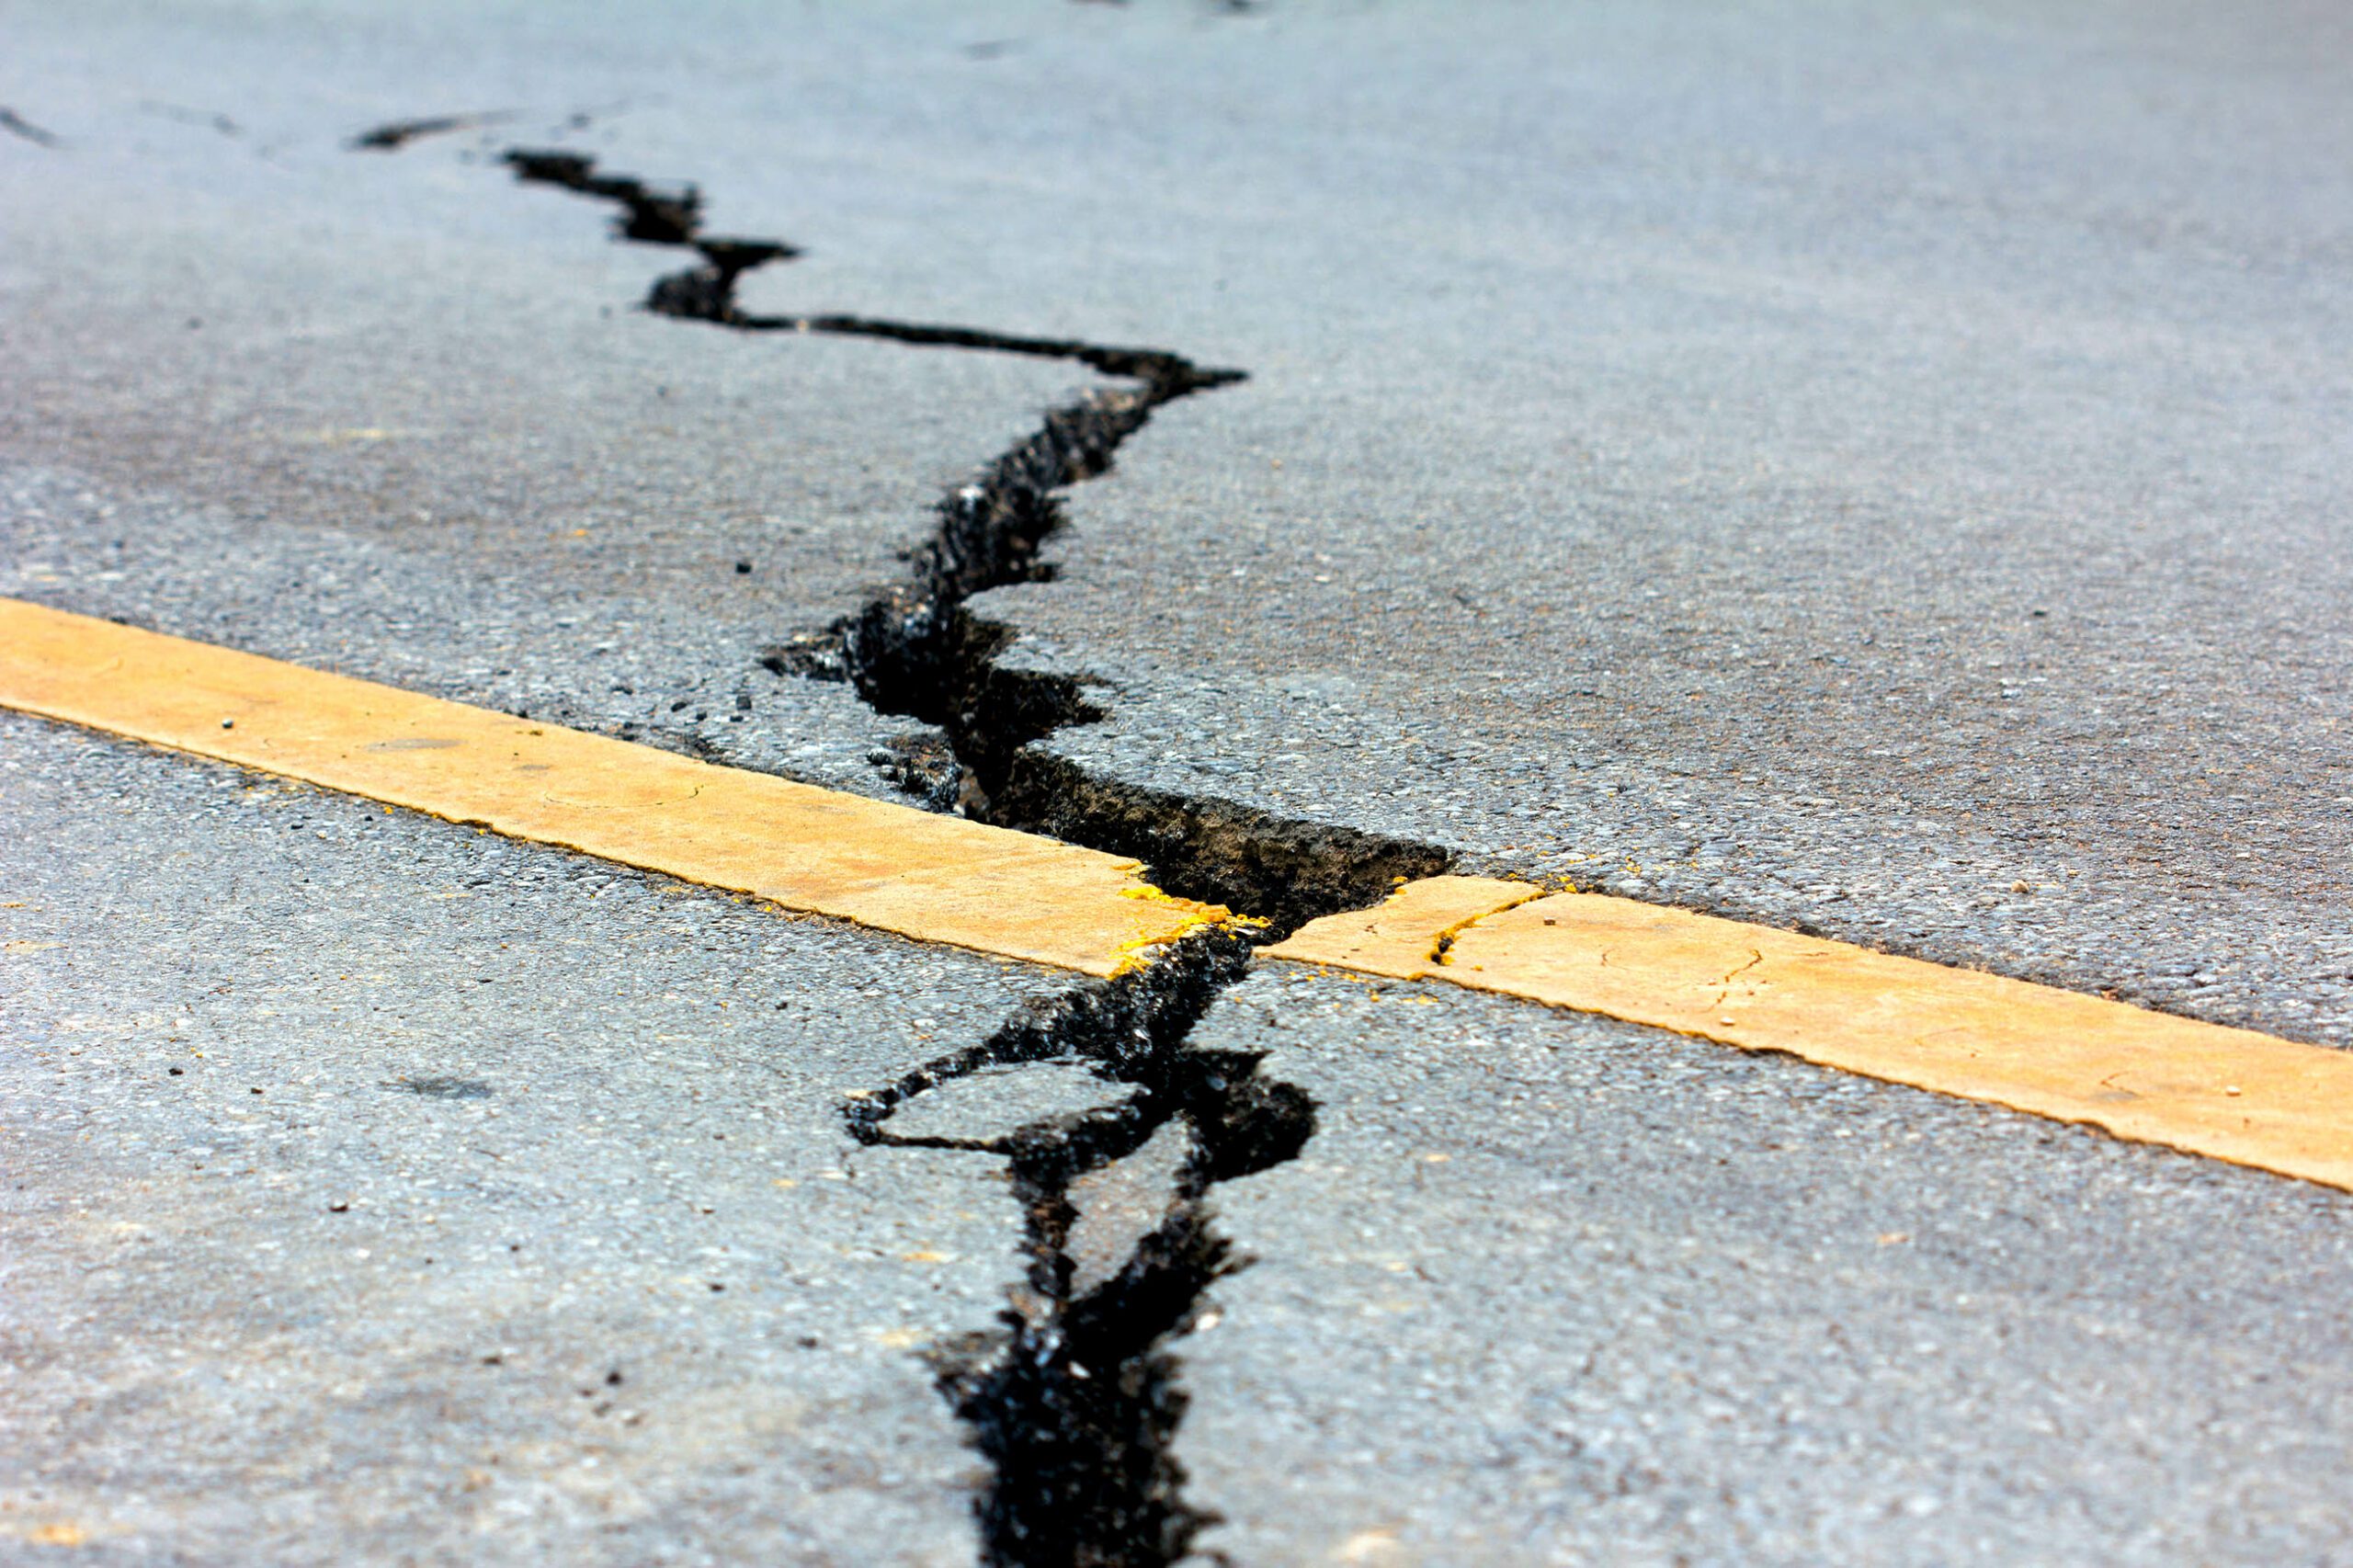 Large crack in road